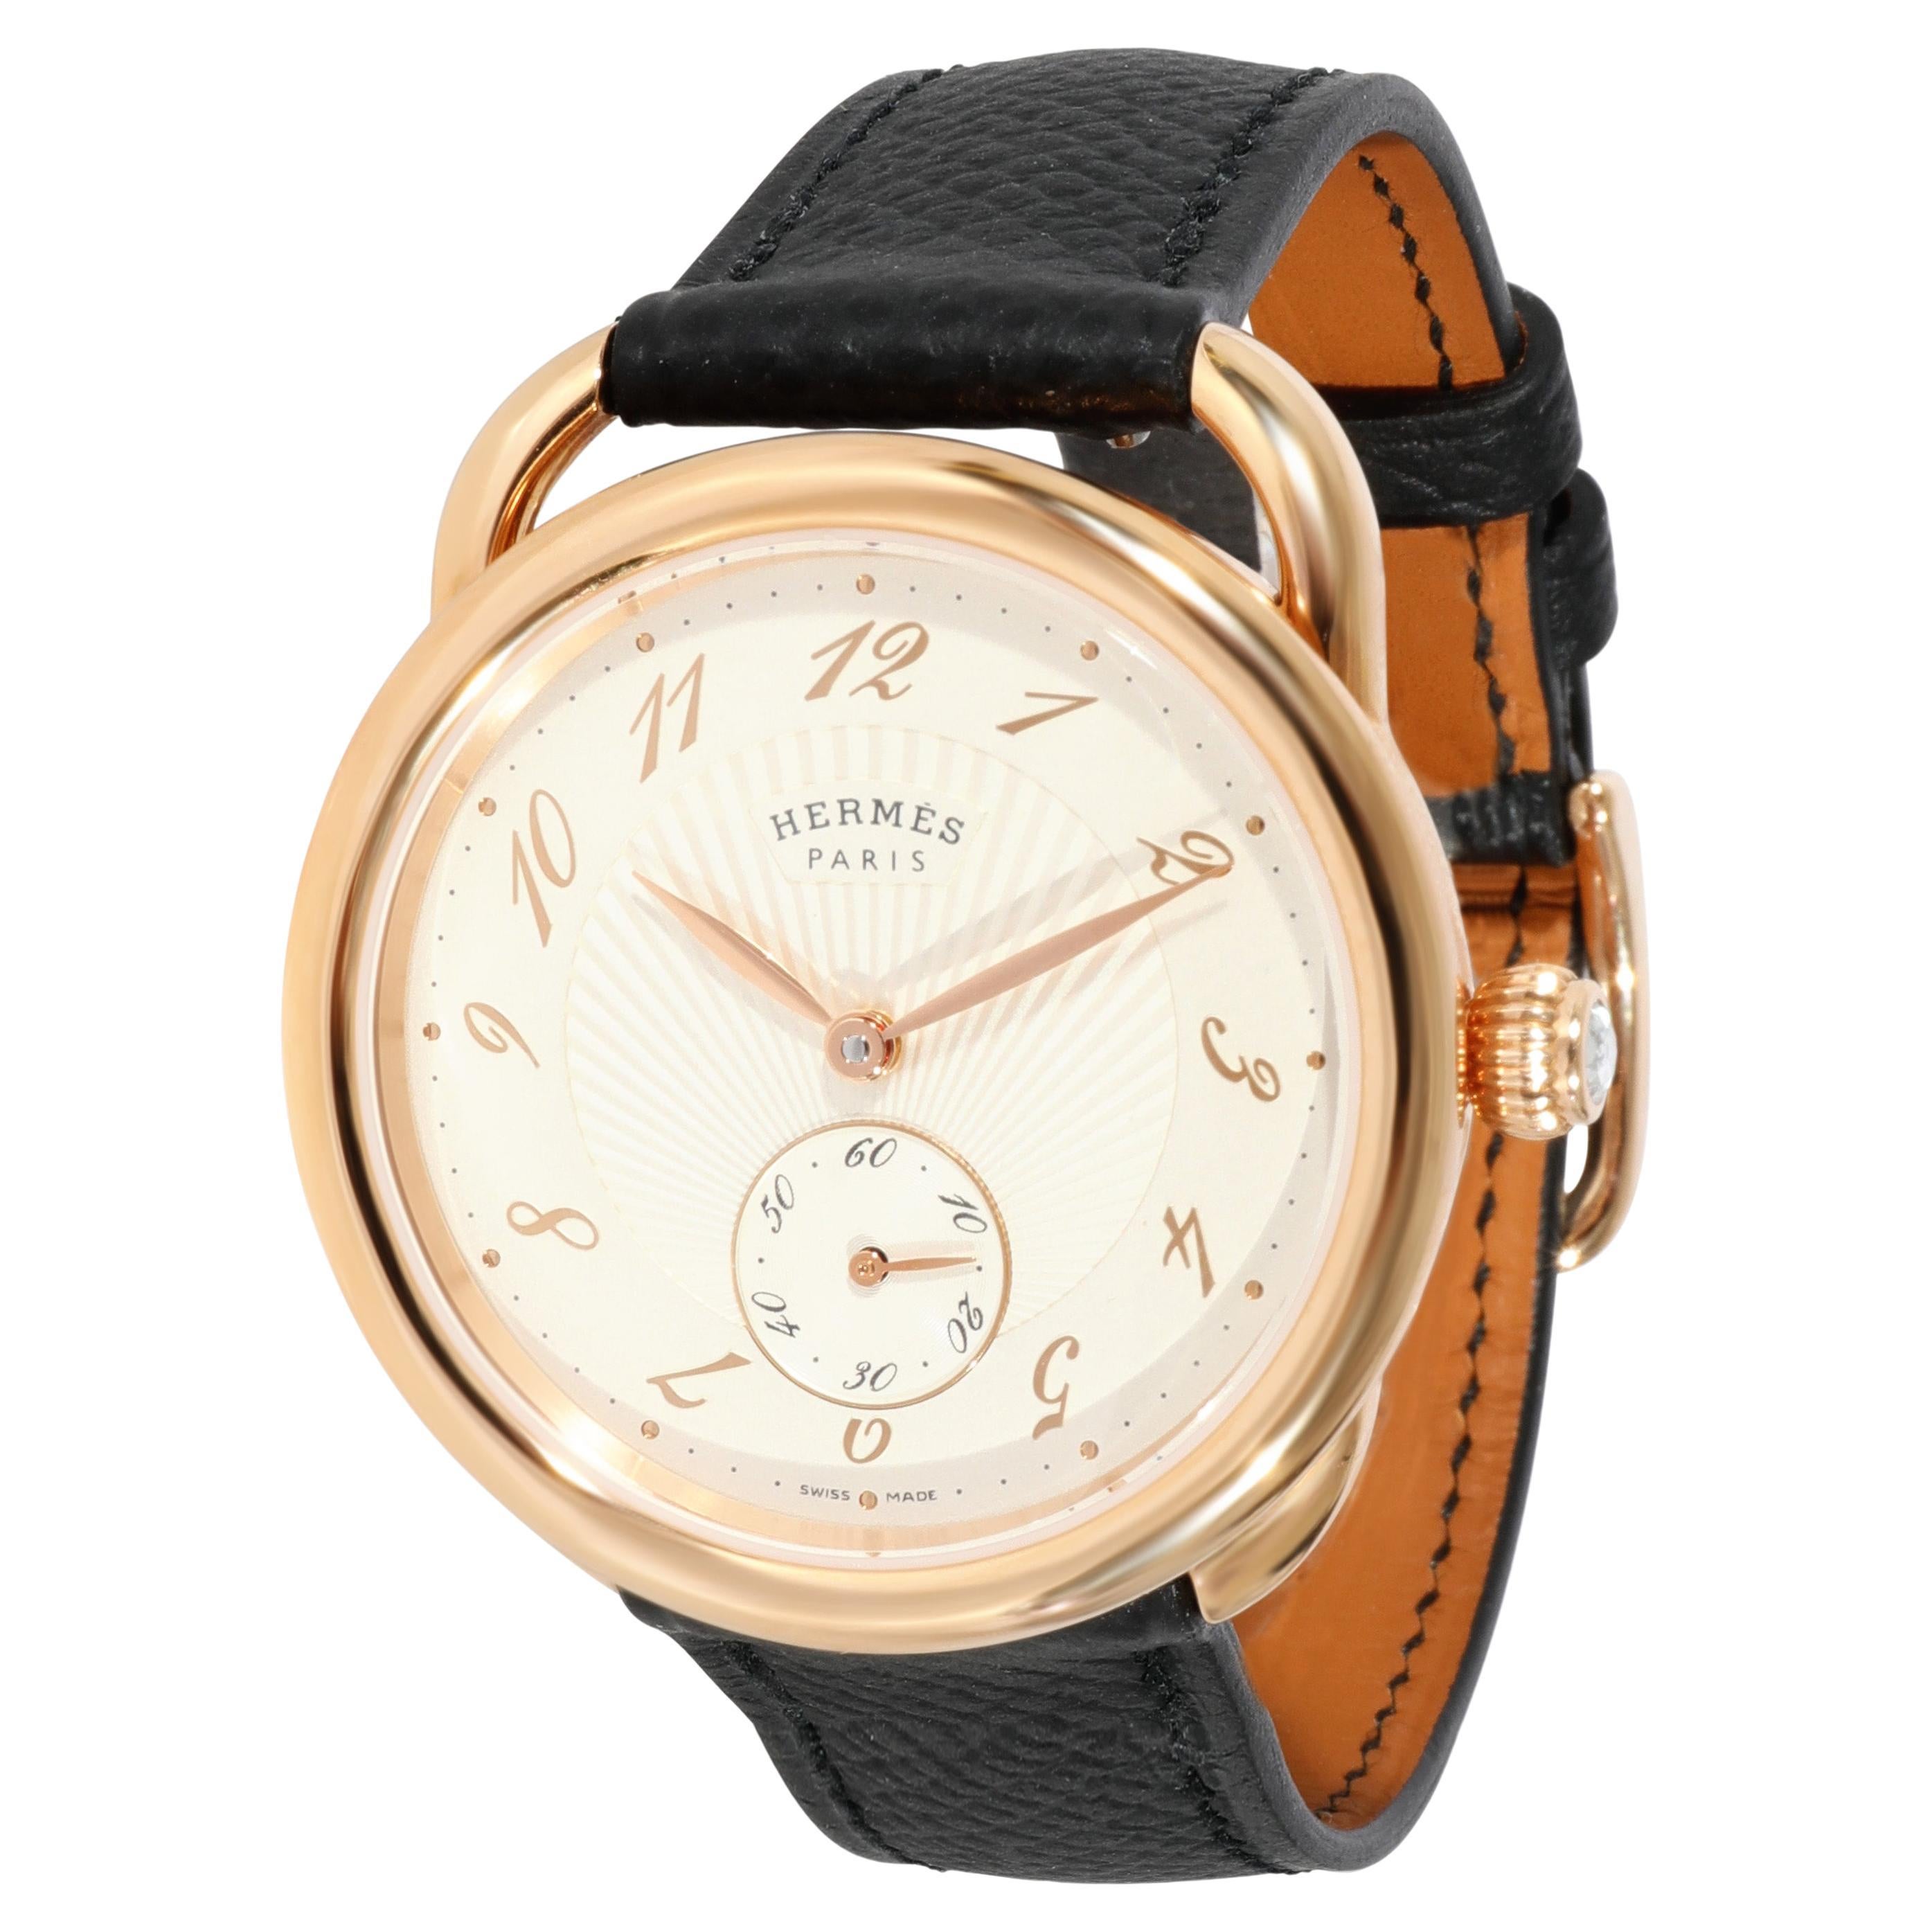 Hermès Arceau Ecuyere AR6.670.221.MN0 Unisex Watch in 18kt Rose Gold For Sale